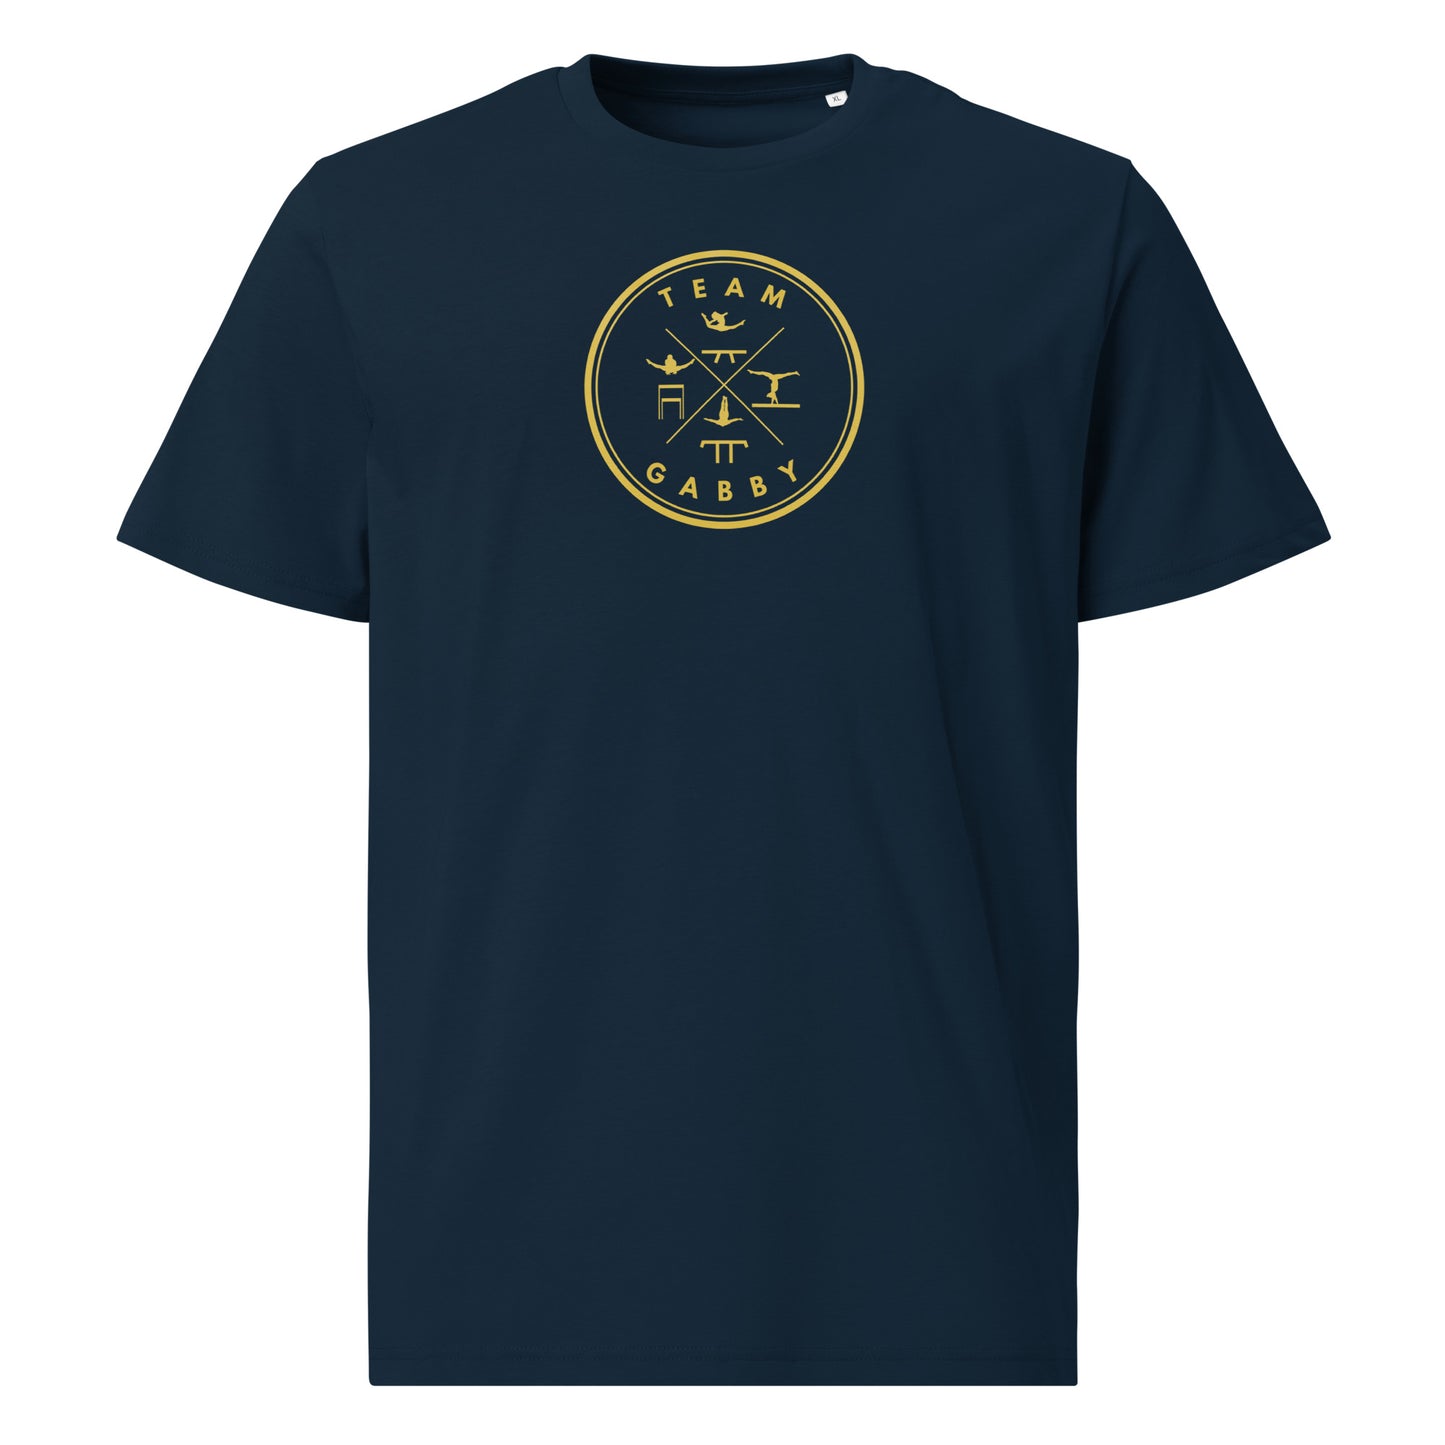 Unisex Team Gabby Gold Organic Cotton T-Shirt